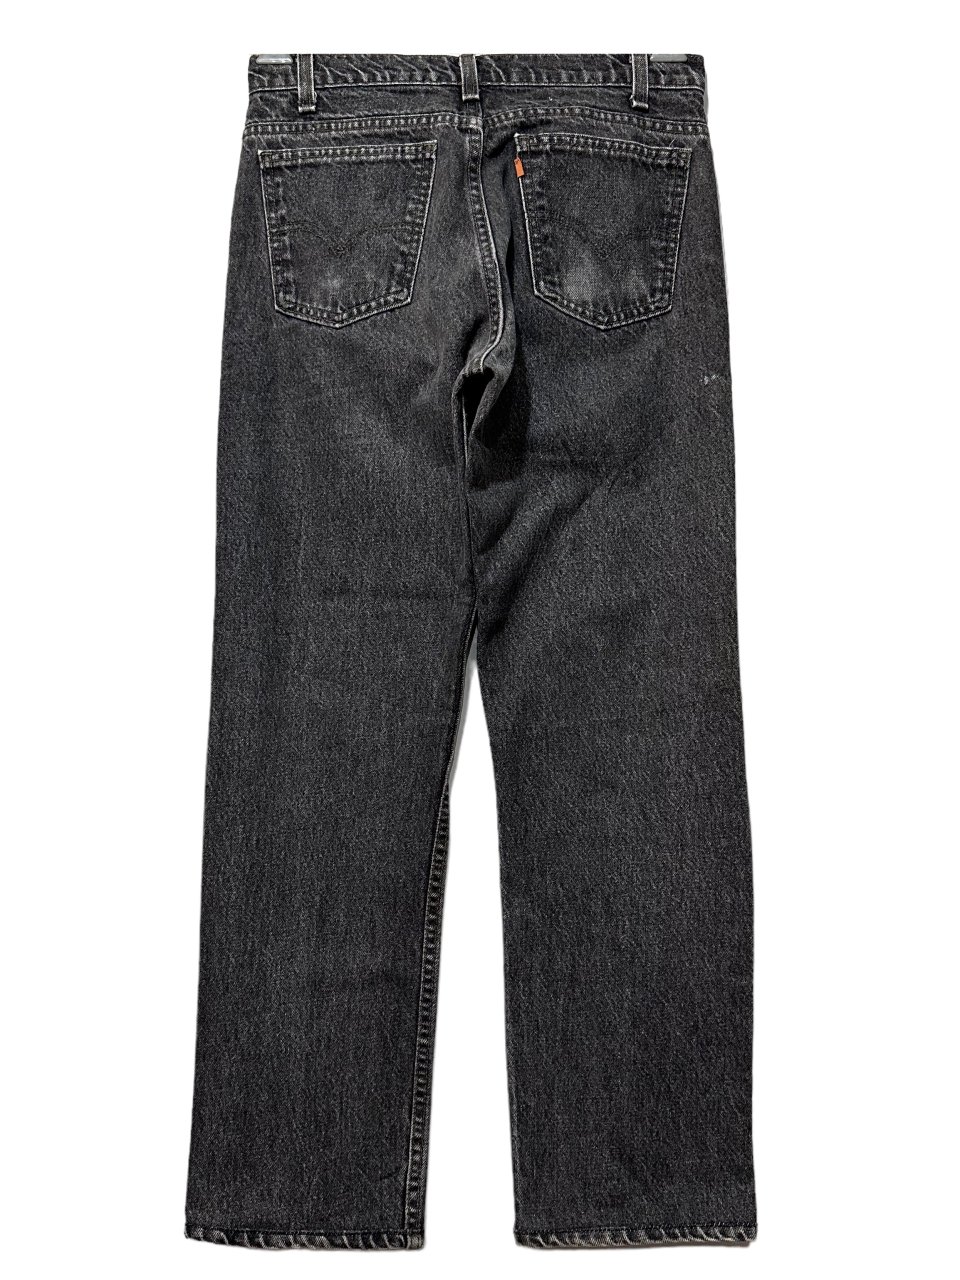 USA製 80s Levi's 505 Black Denim Pants 